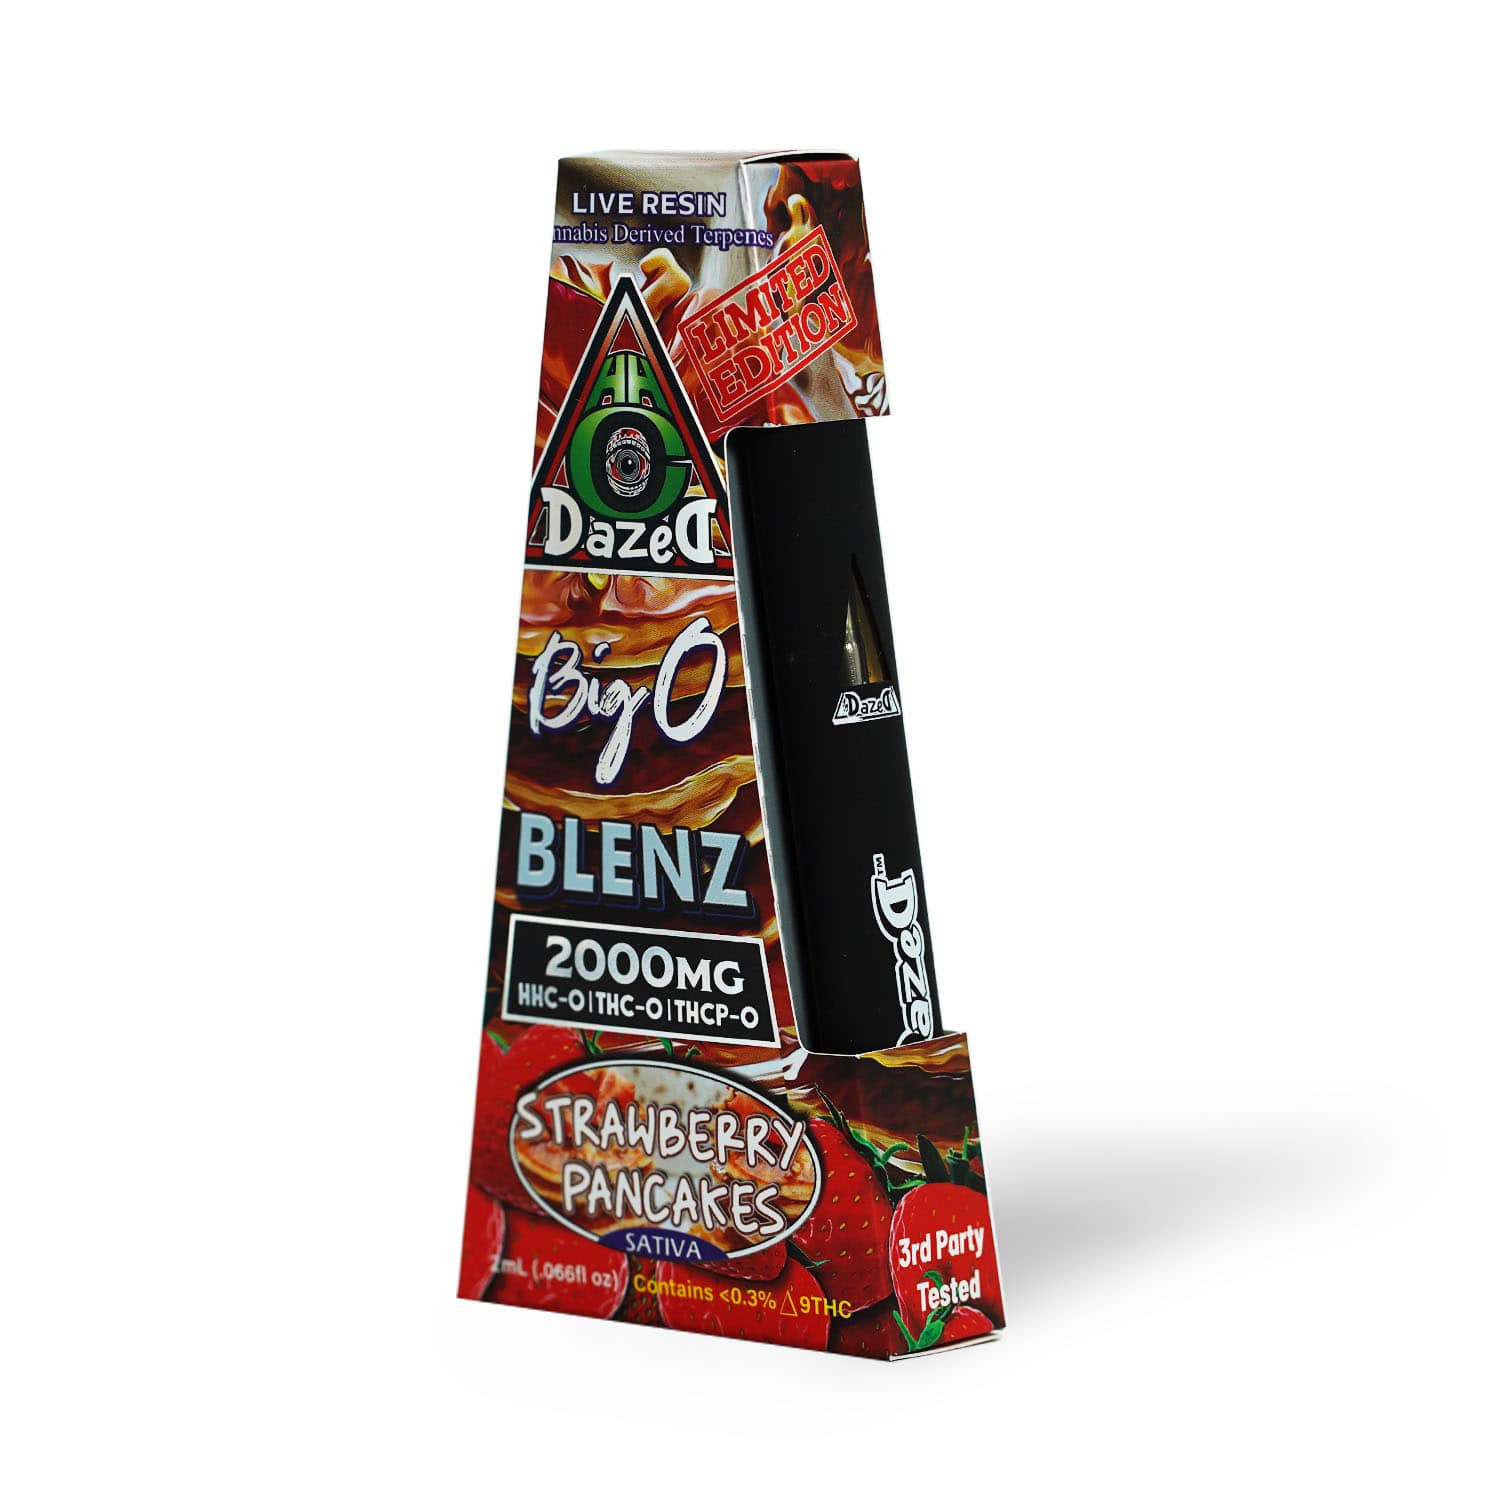 DazeD8 Strawberry Pancakes HHC-O + THC-O + THCP-O Live Resin Disposable (2g) Best Price